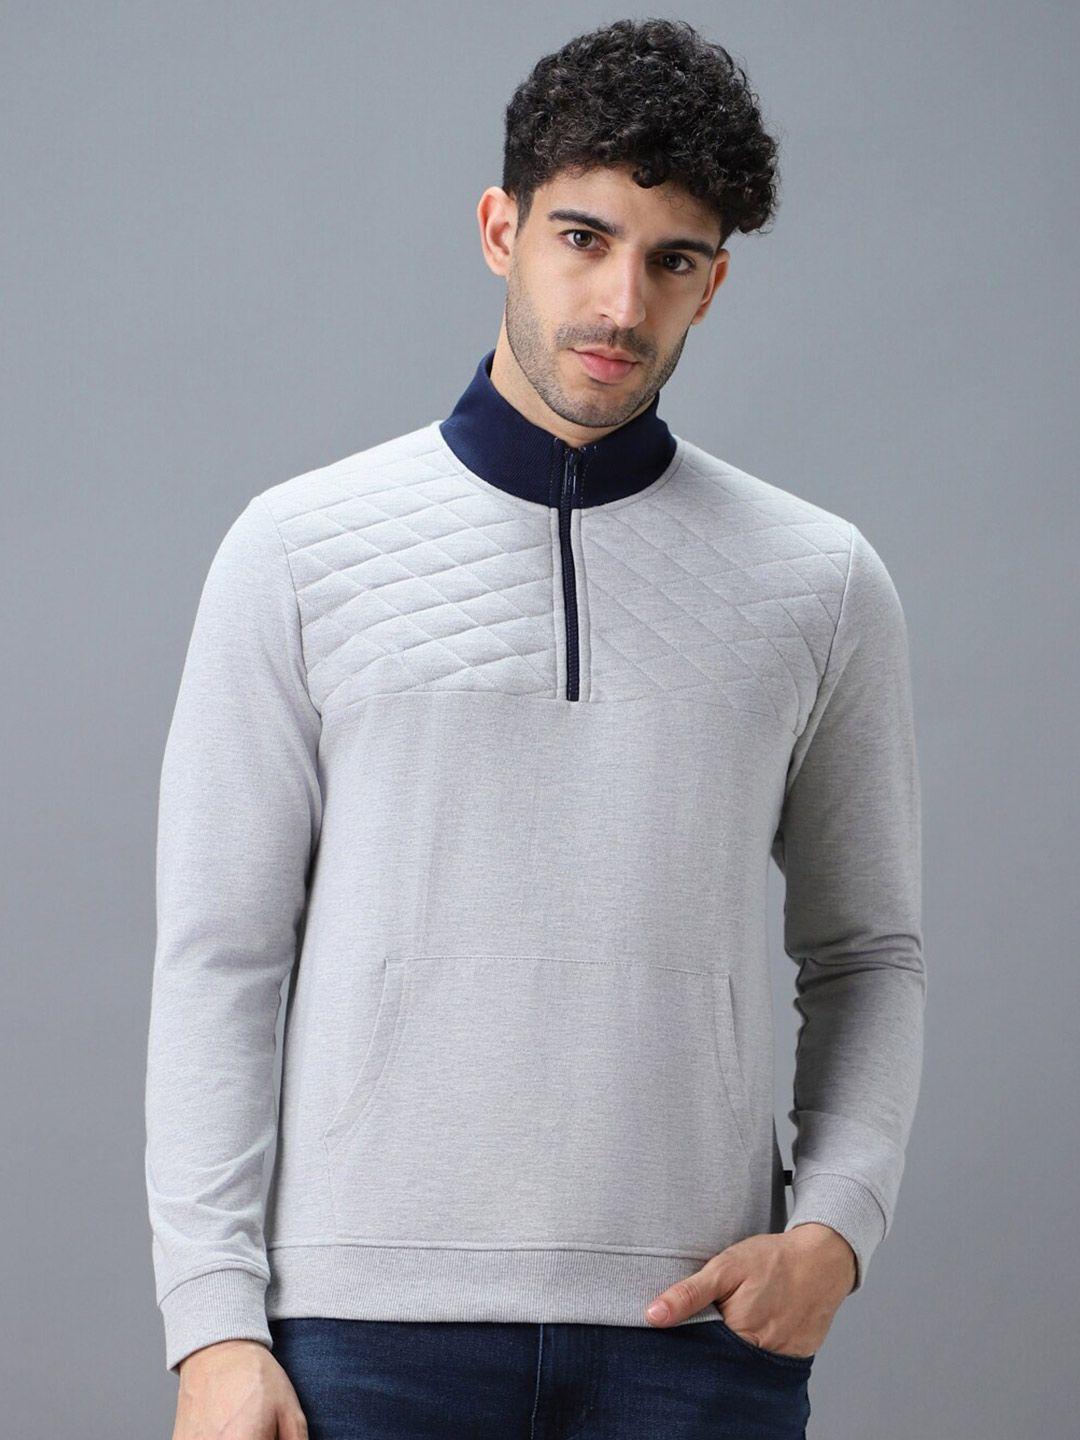 urbano fashion mock neck sweatshirt